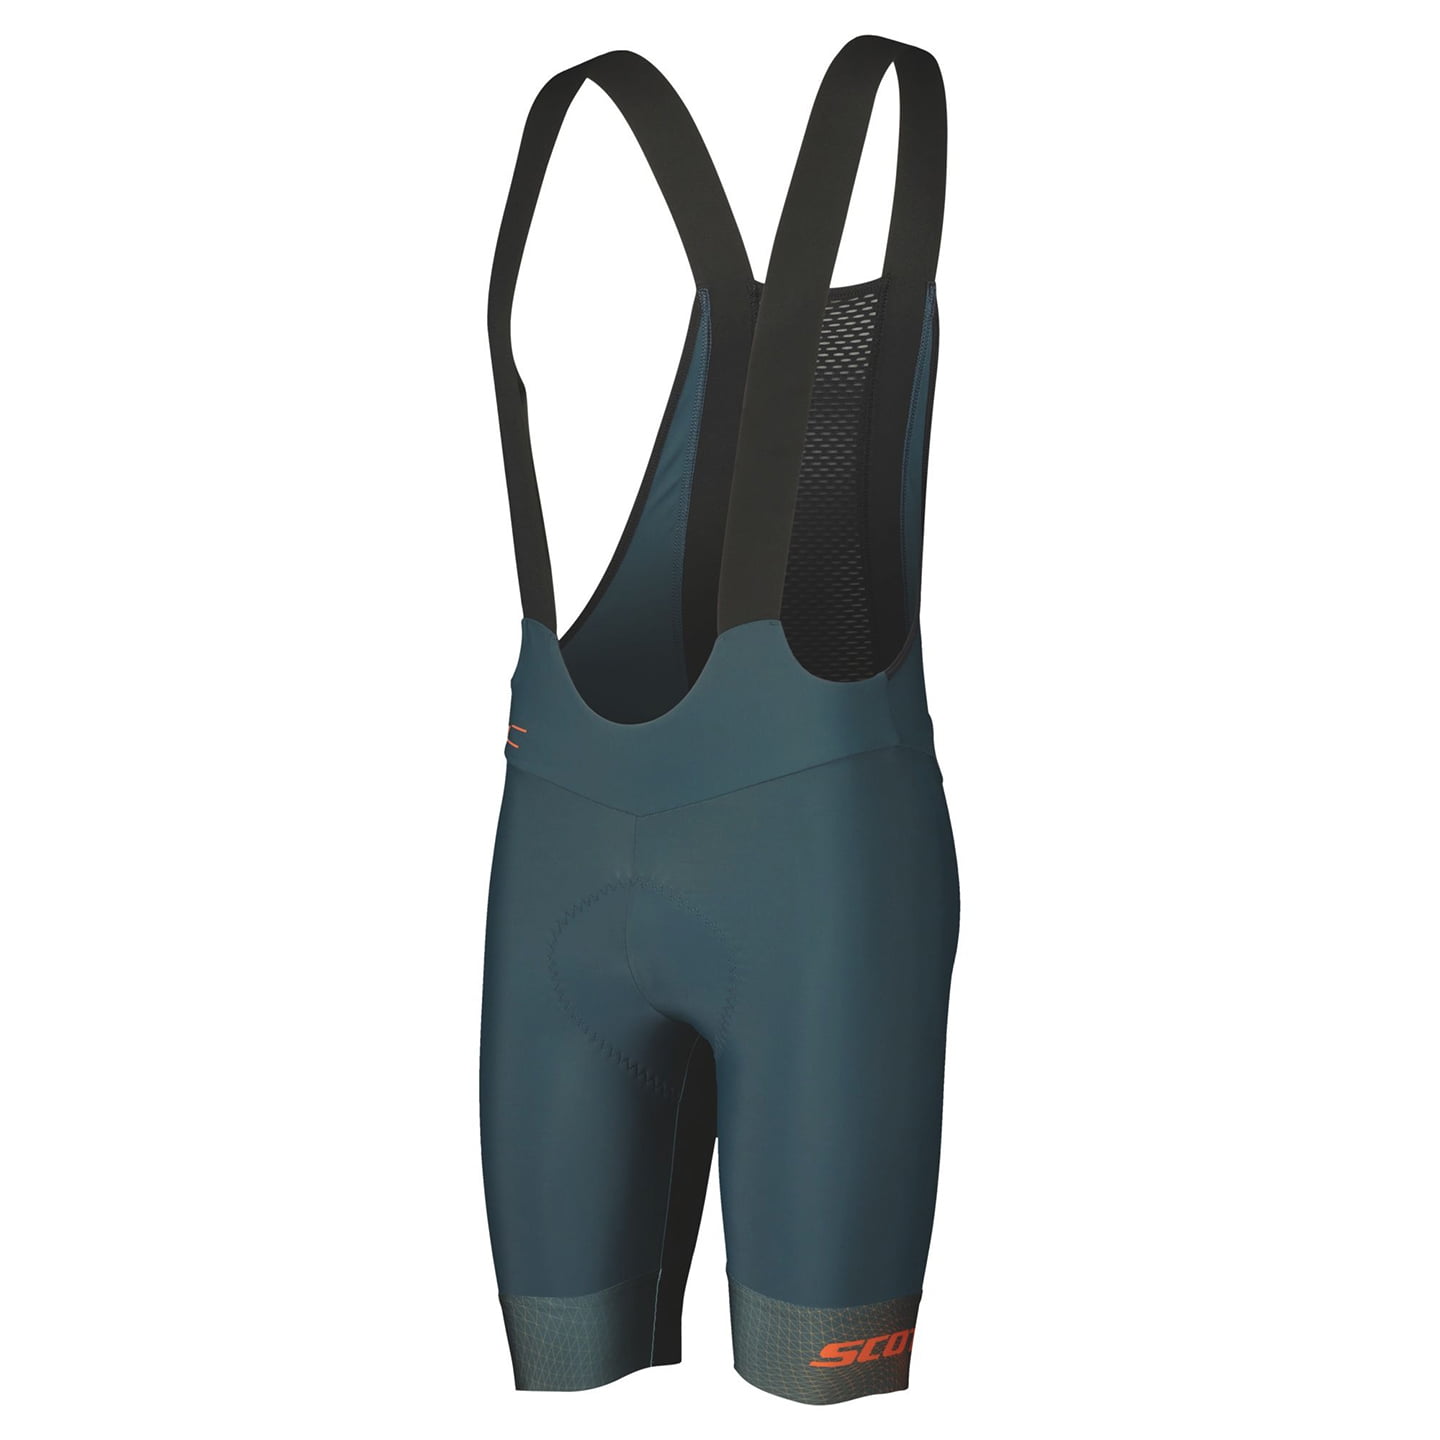 SCOTT RC Pro +++ Bib Shorts Bib Shorts, for men, size 2XL, Cycle shorts, Cycling clothing